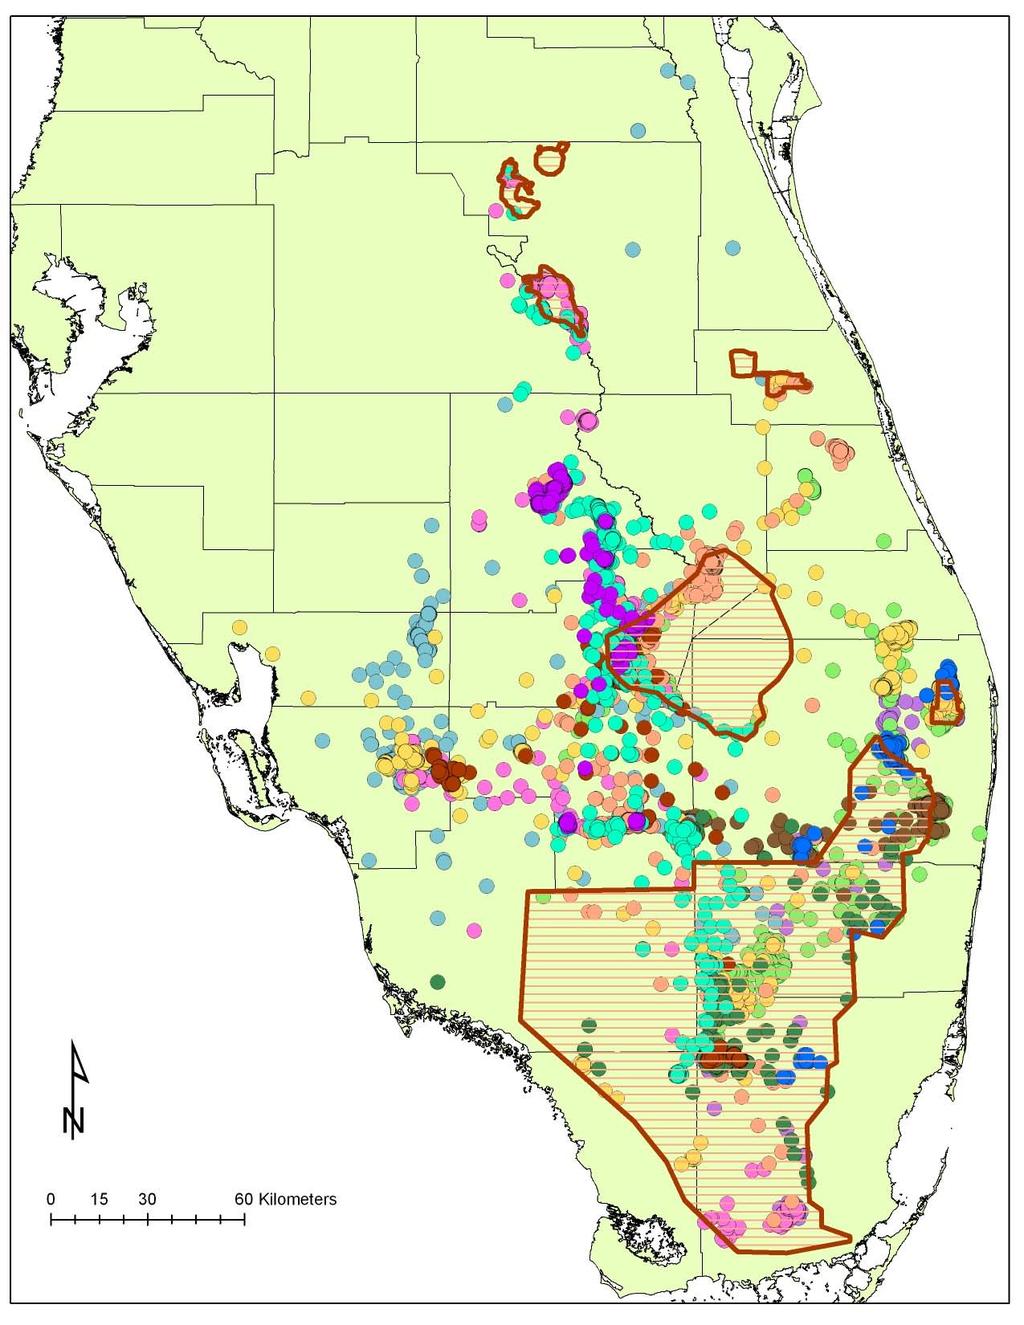 Satellite/GPS data 12 kites, 80,843 locations February 2012 11/20/14 52% of the breeding season